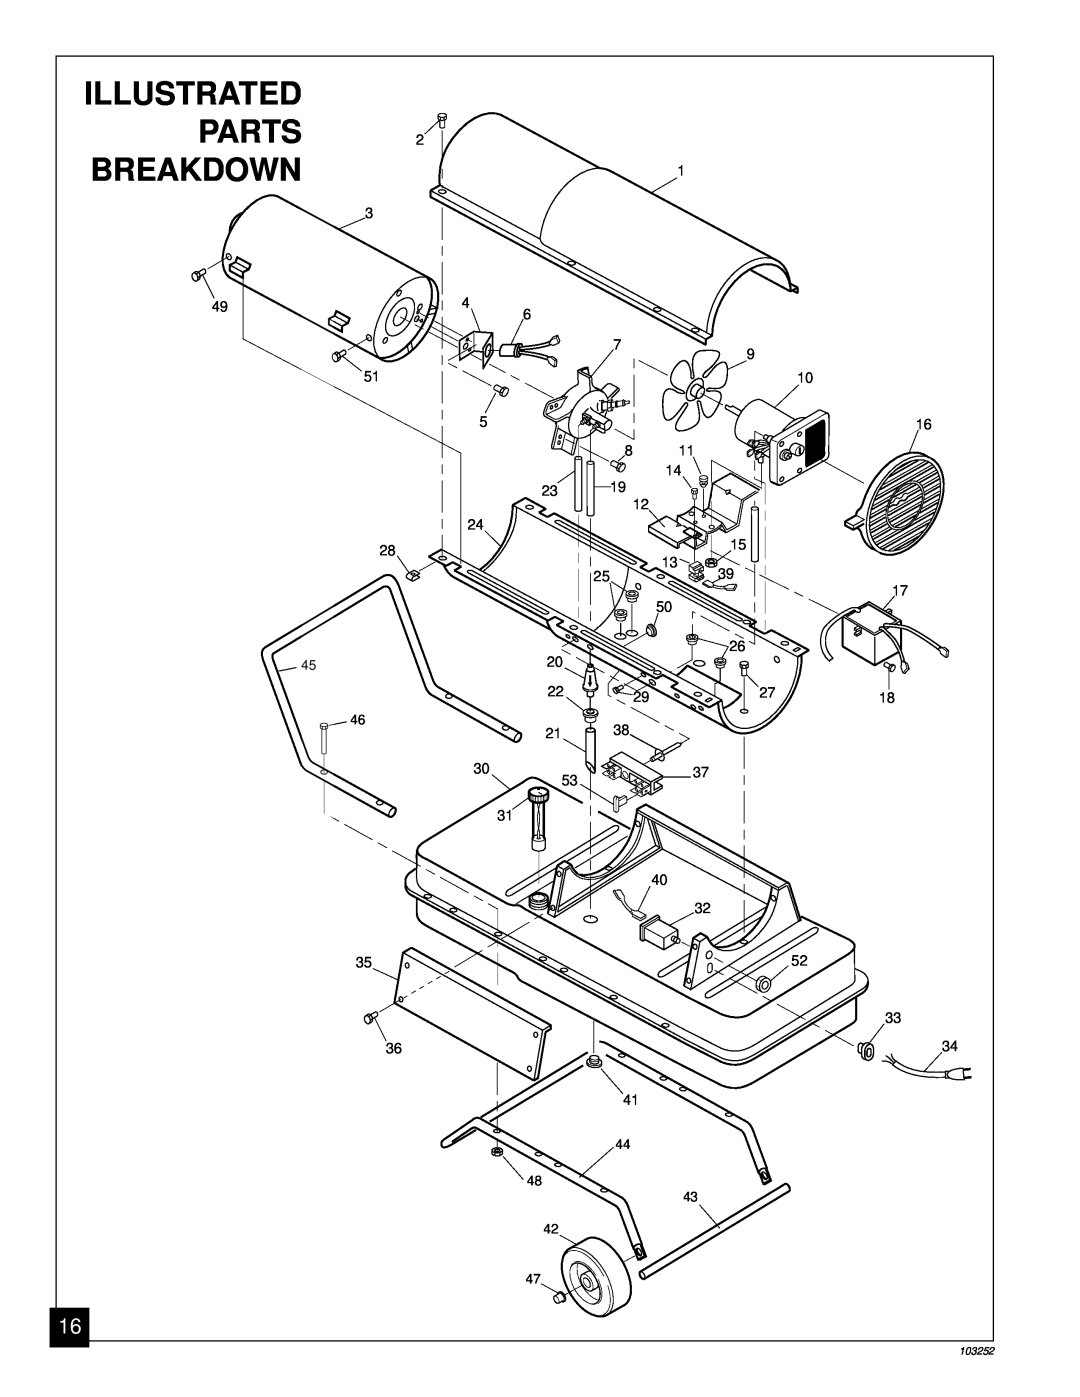 Desa RK150 owner manual Illustrated, Parts, Breakdown 